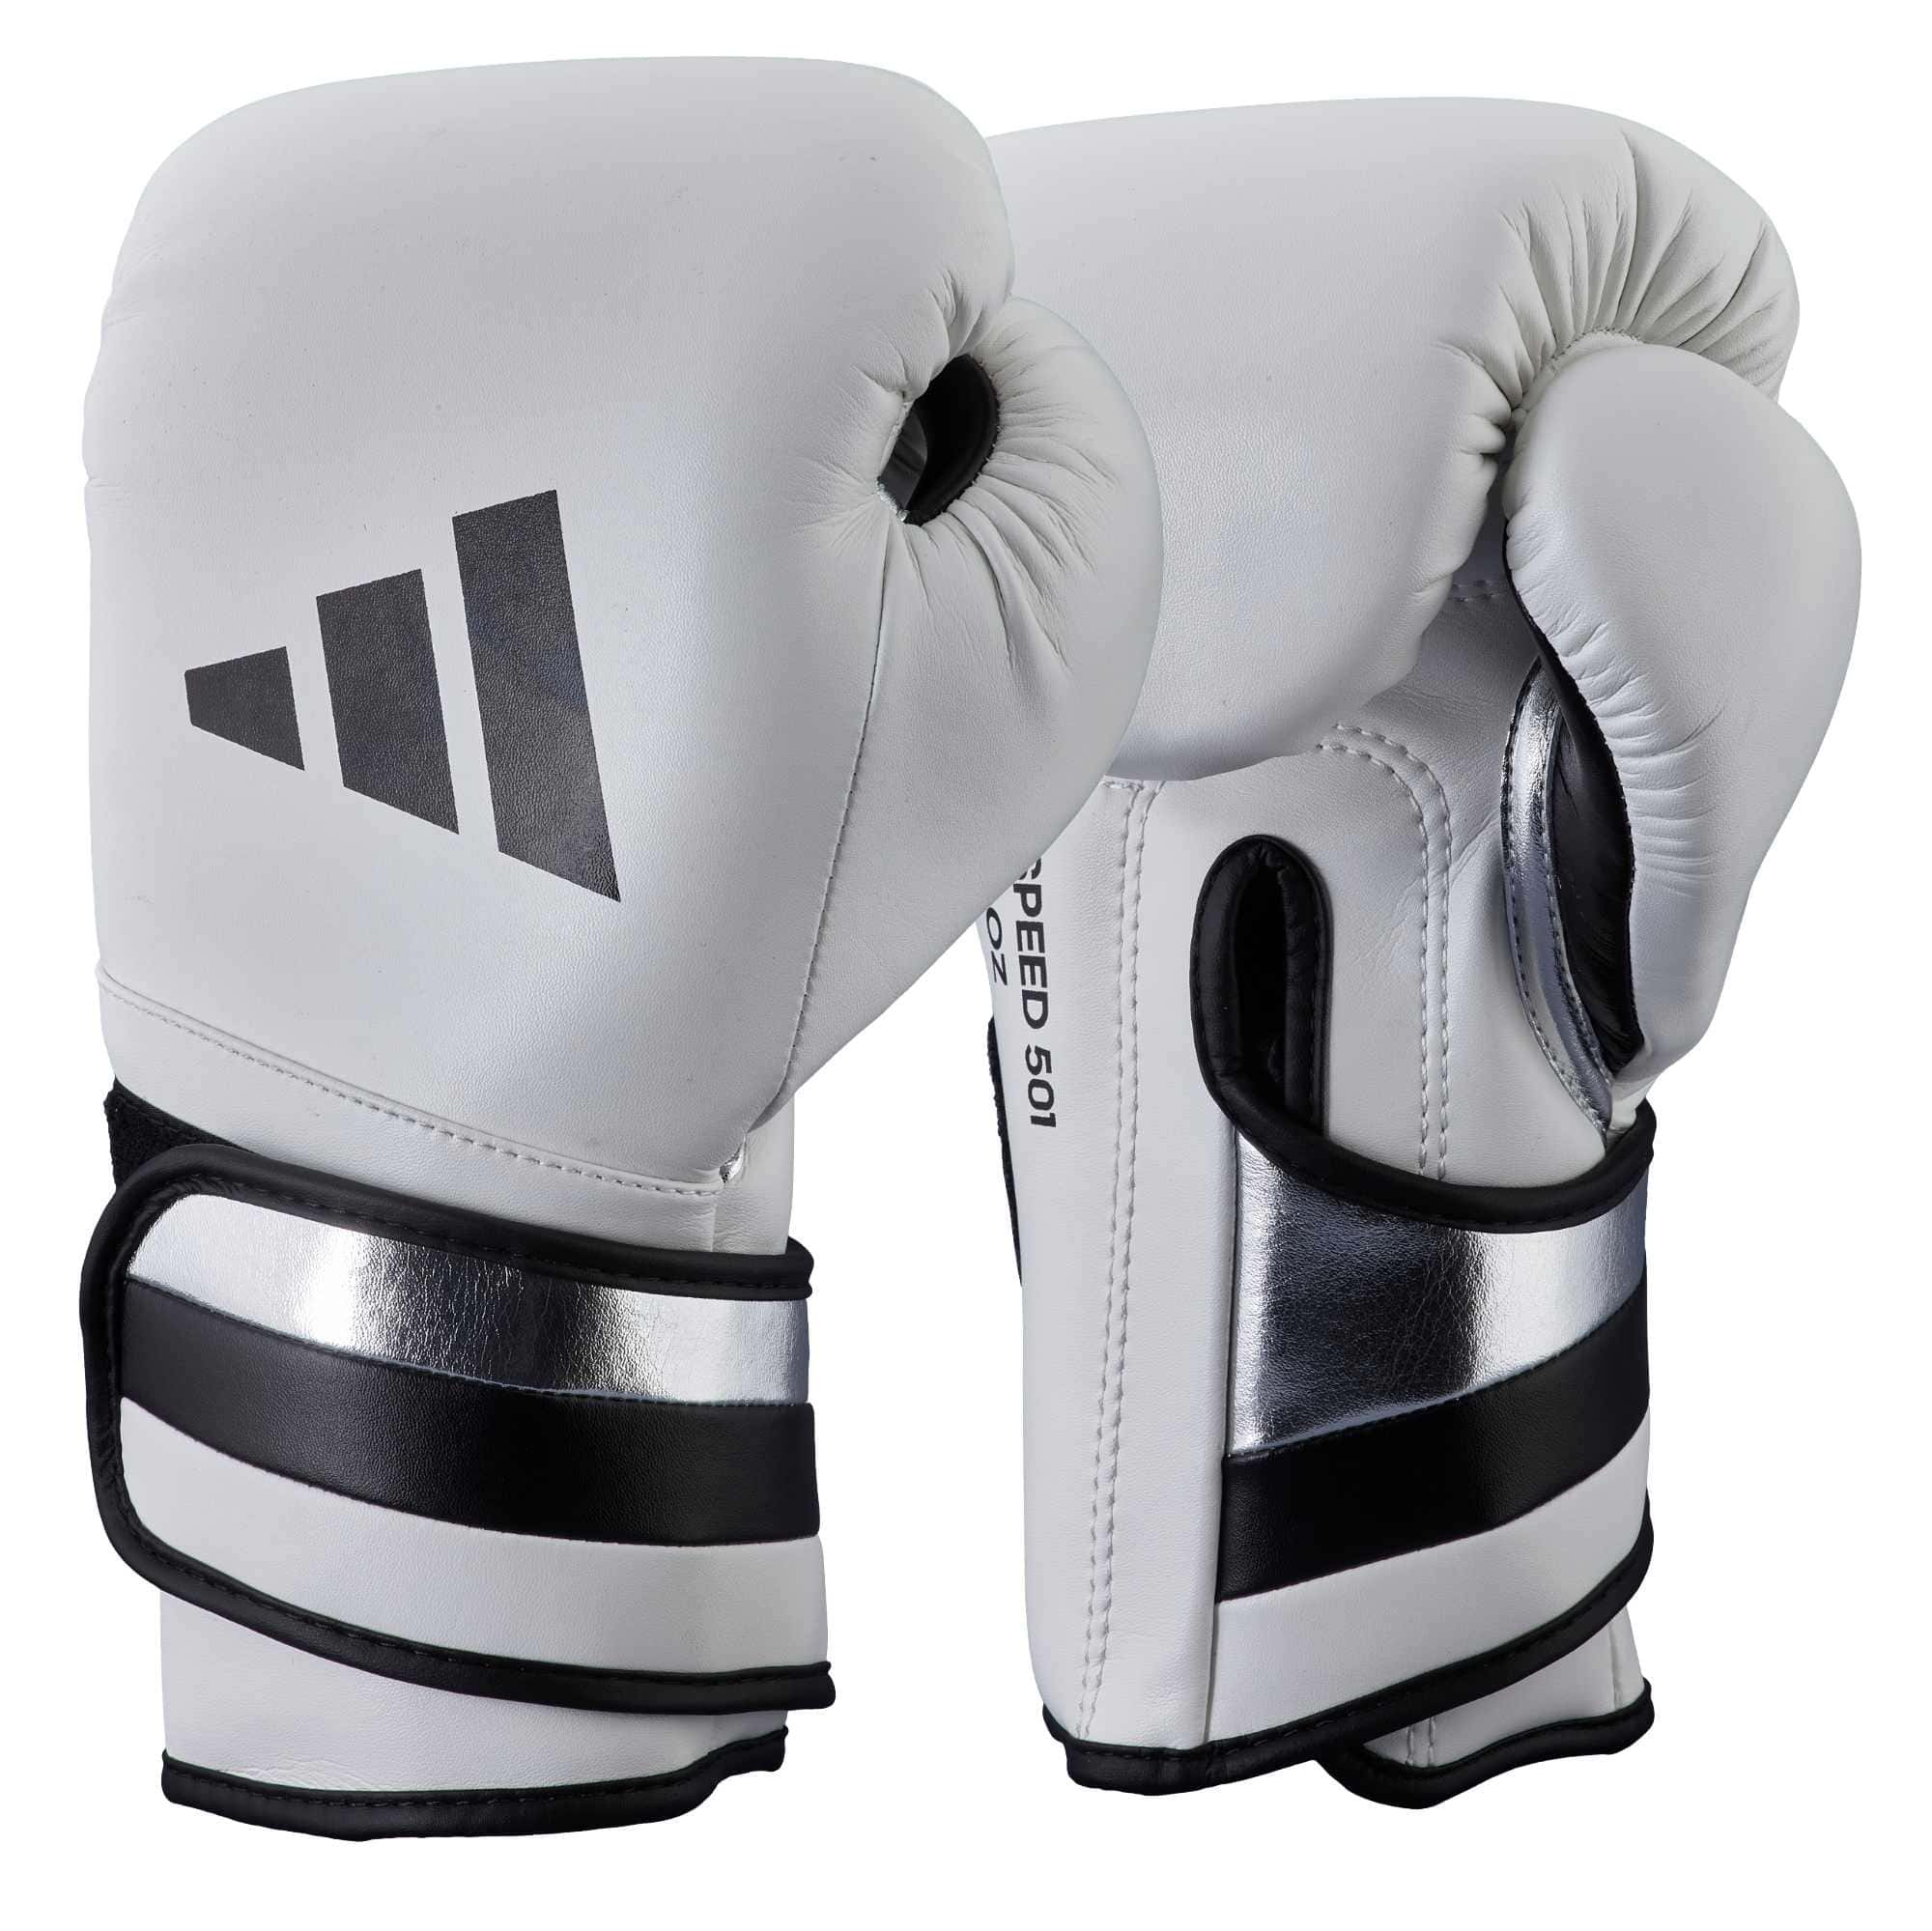 Buy ADIDAS Boxing Gloves SPEED 500 White/Black Online ✓ - emparor Fight Shop | MMA-Handschuhe